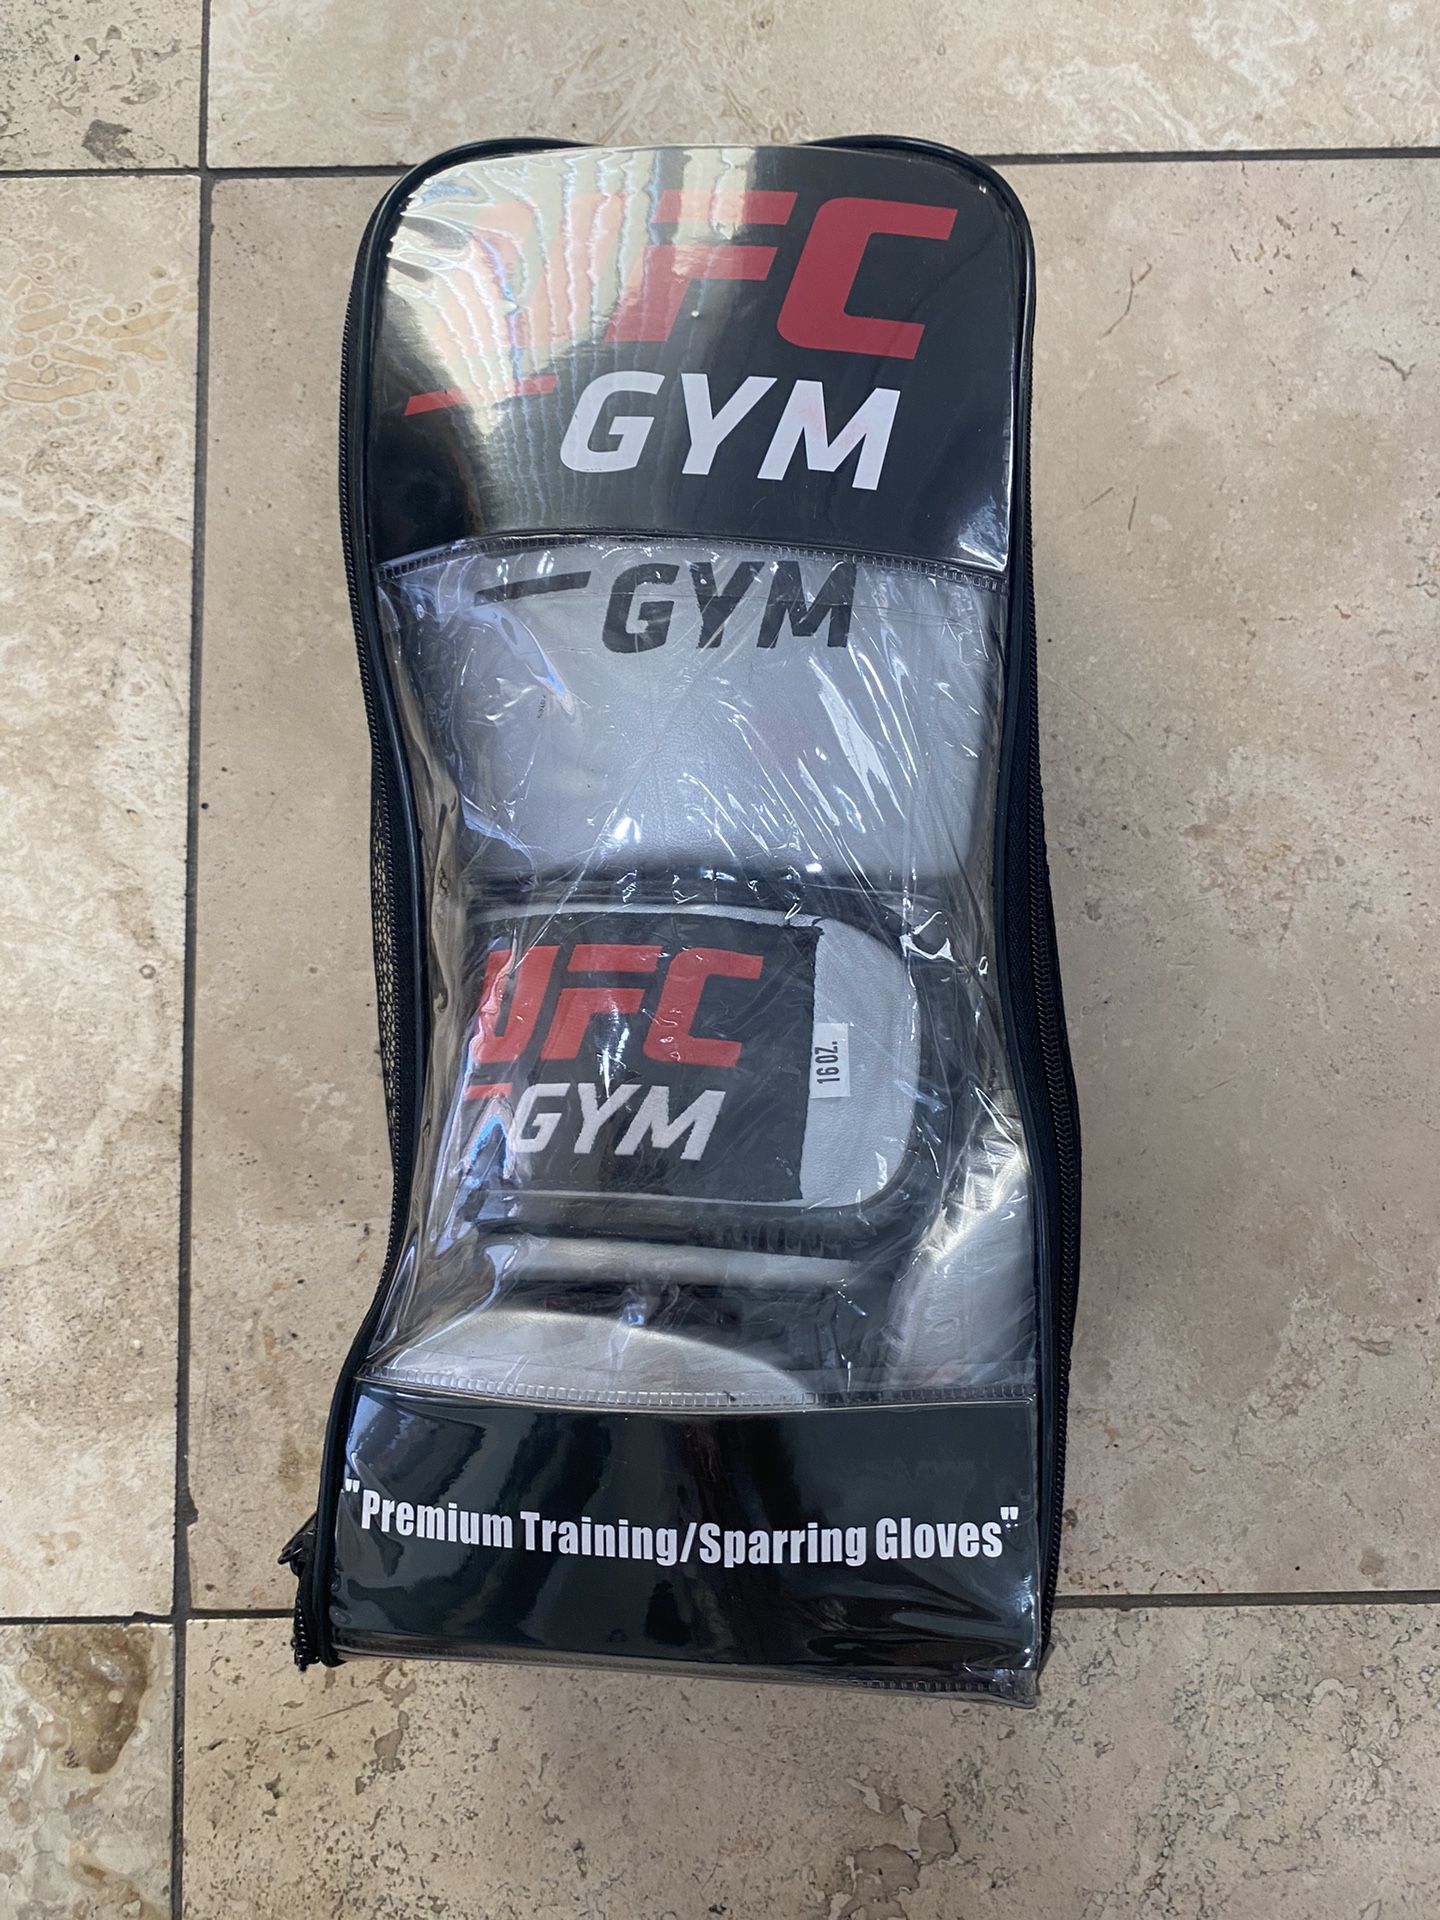 New UFC Gym 16oz Boxing Gloves 